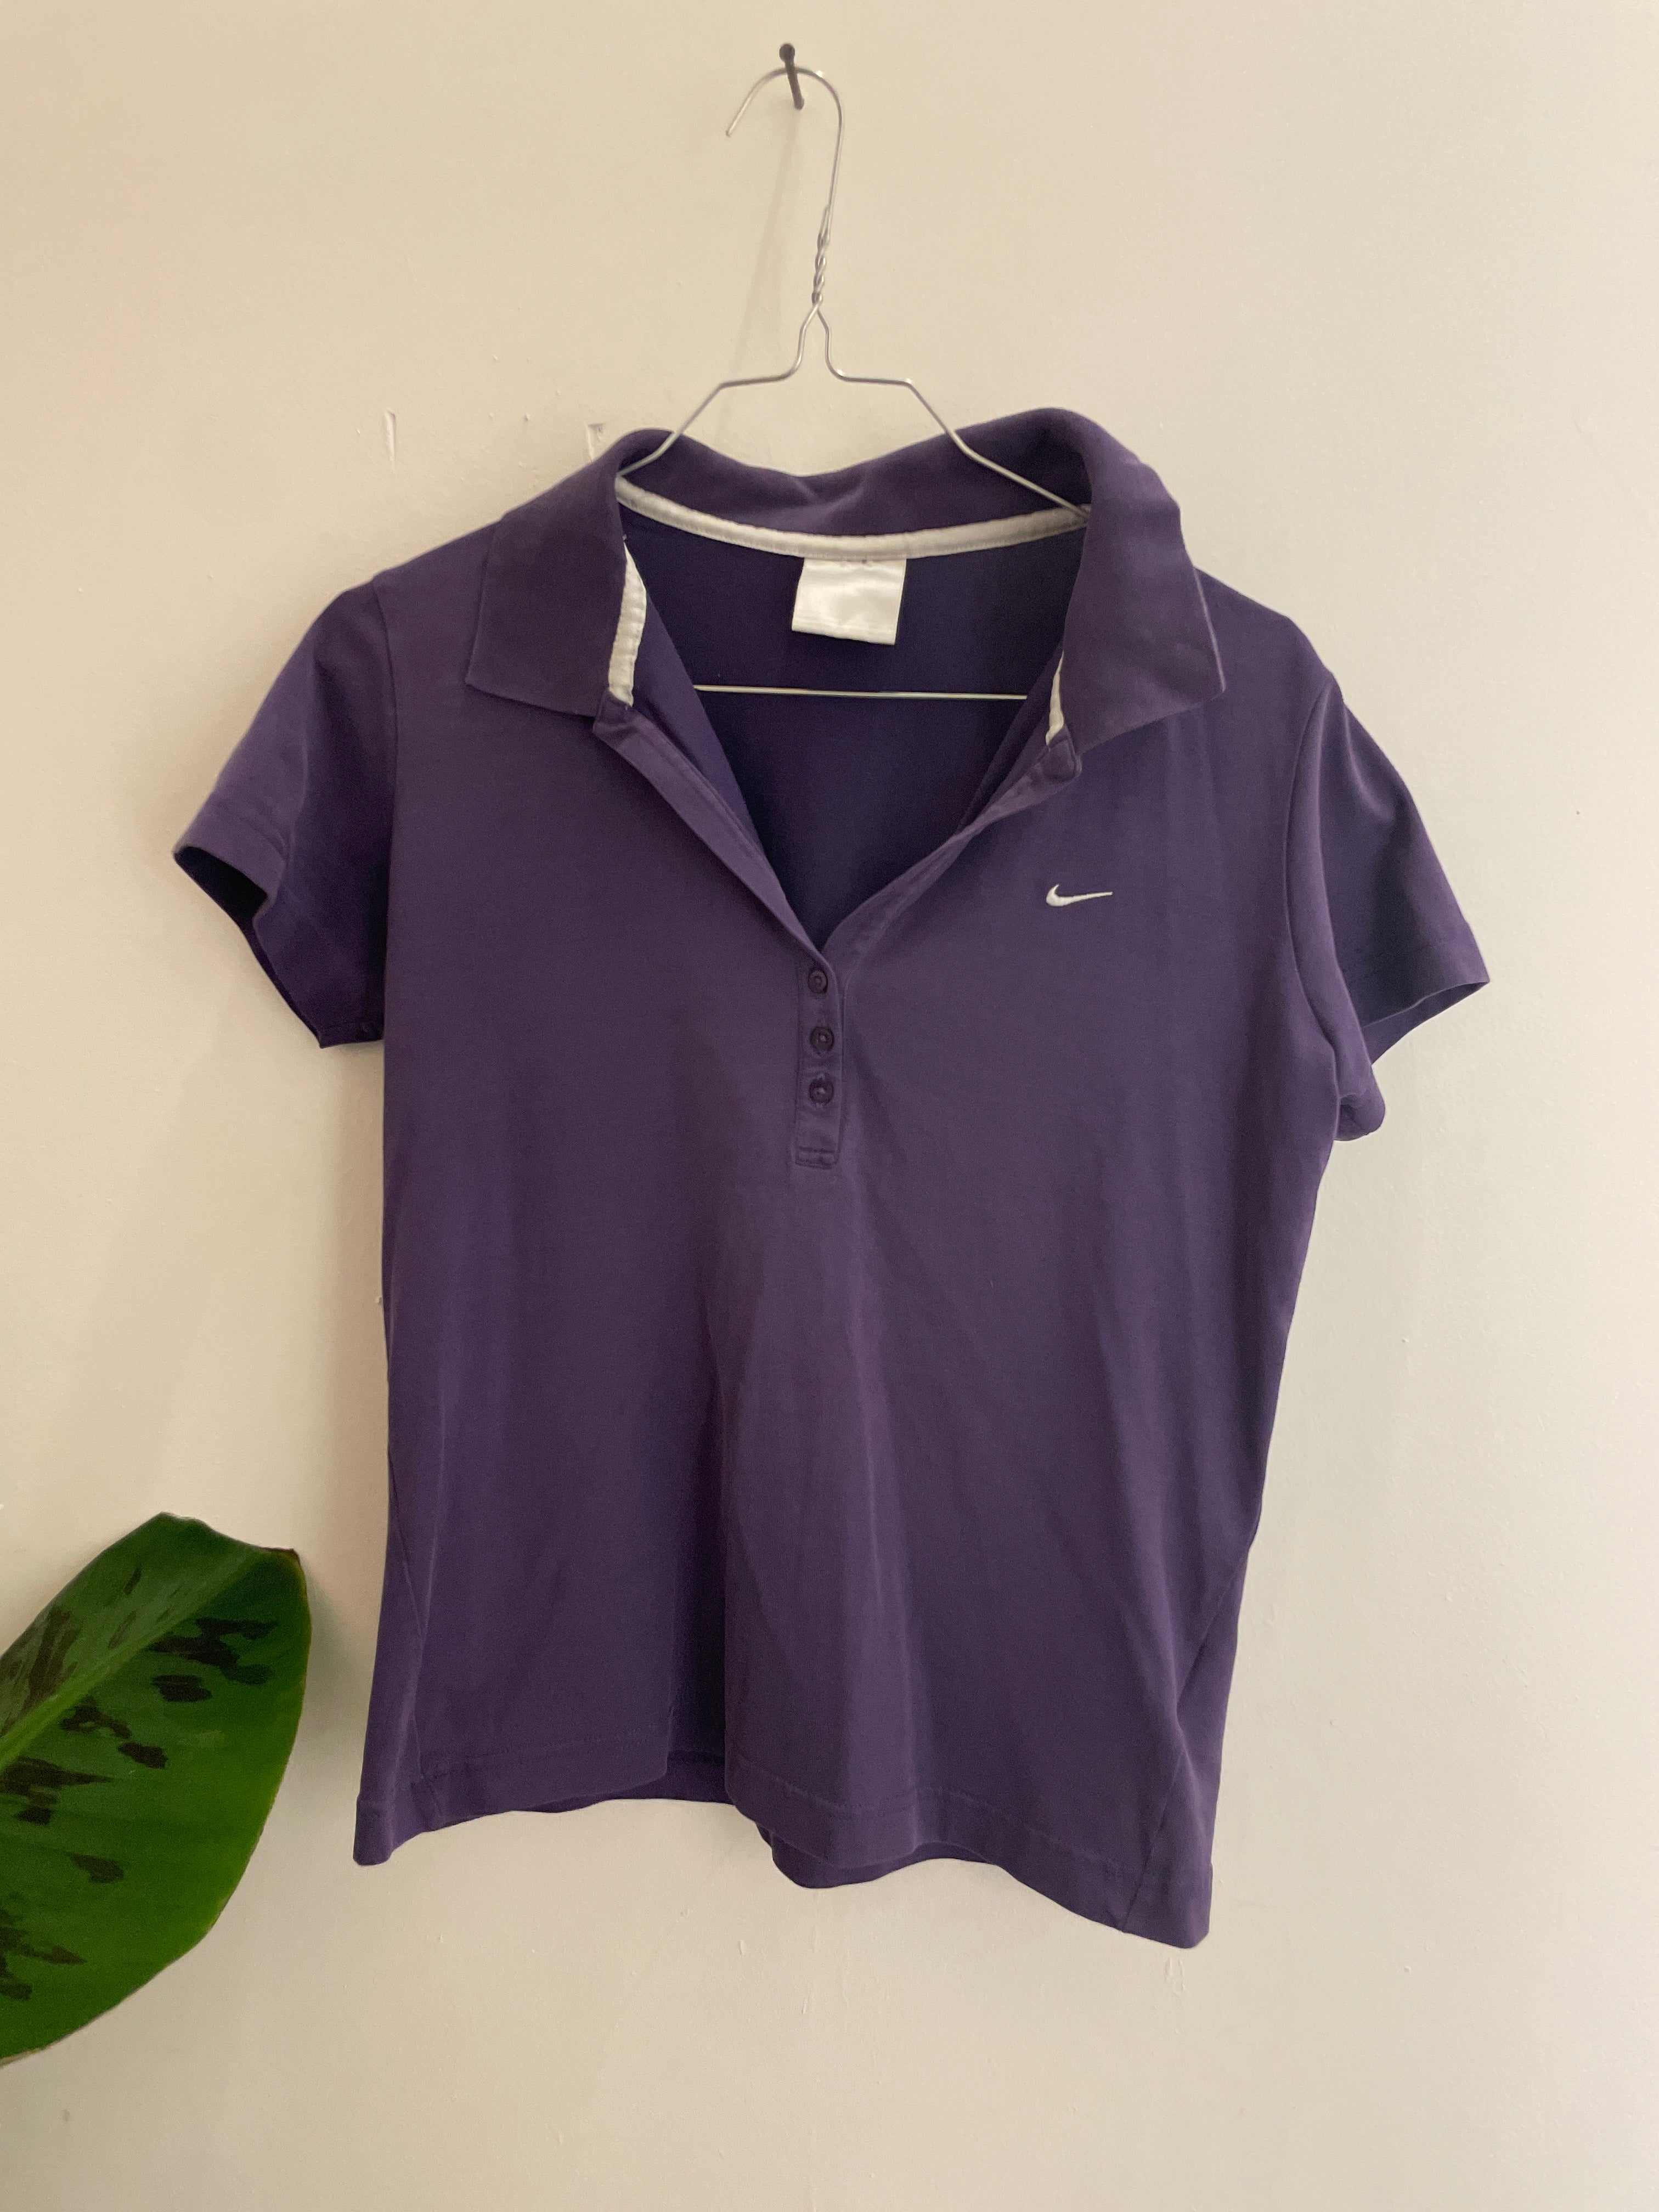 Vintage nike purple shirt size S